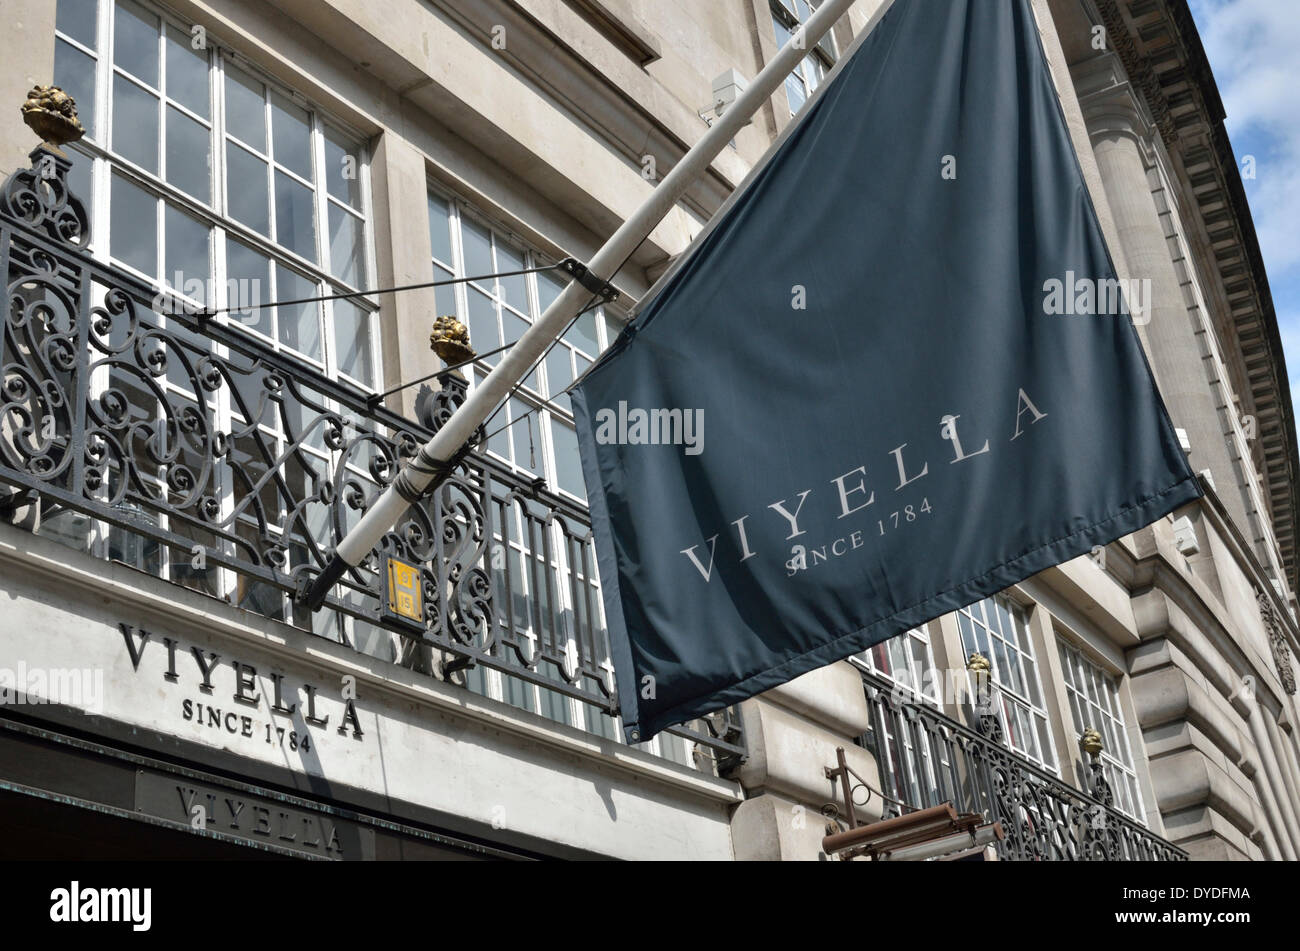 Viyella fashion store. Banque D'Images